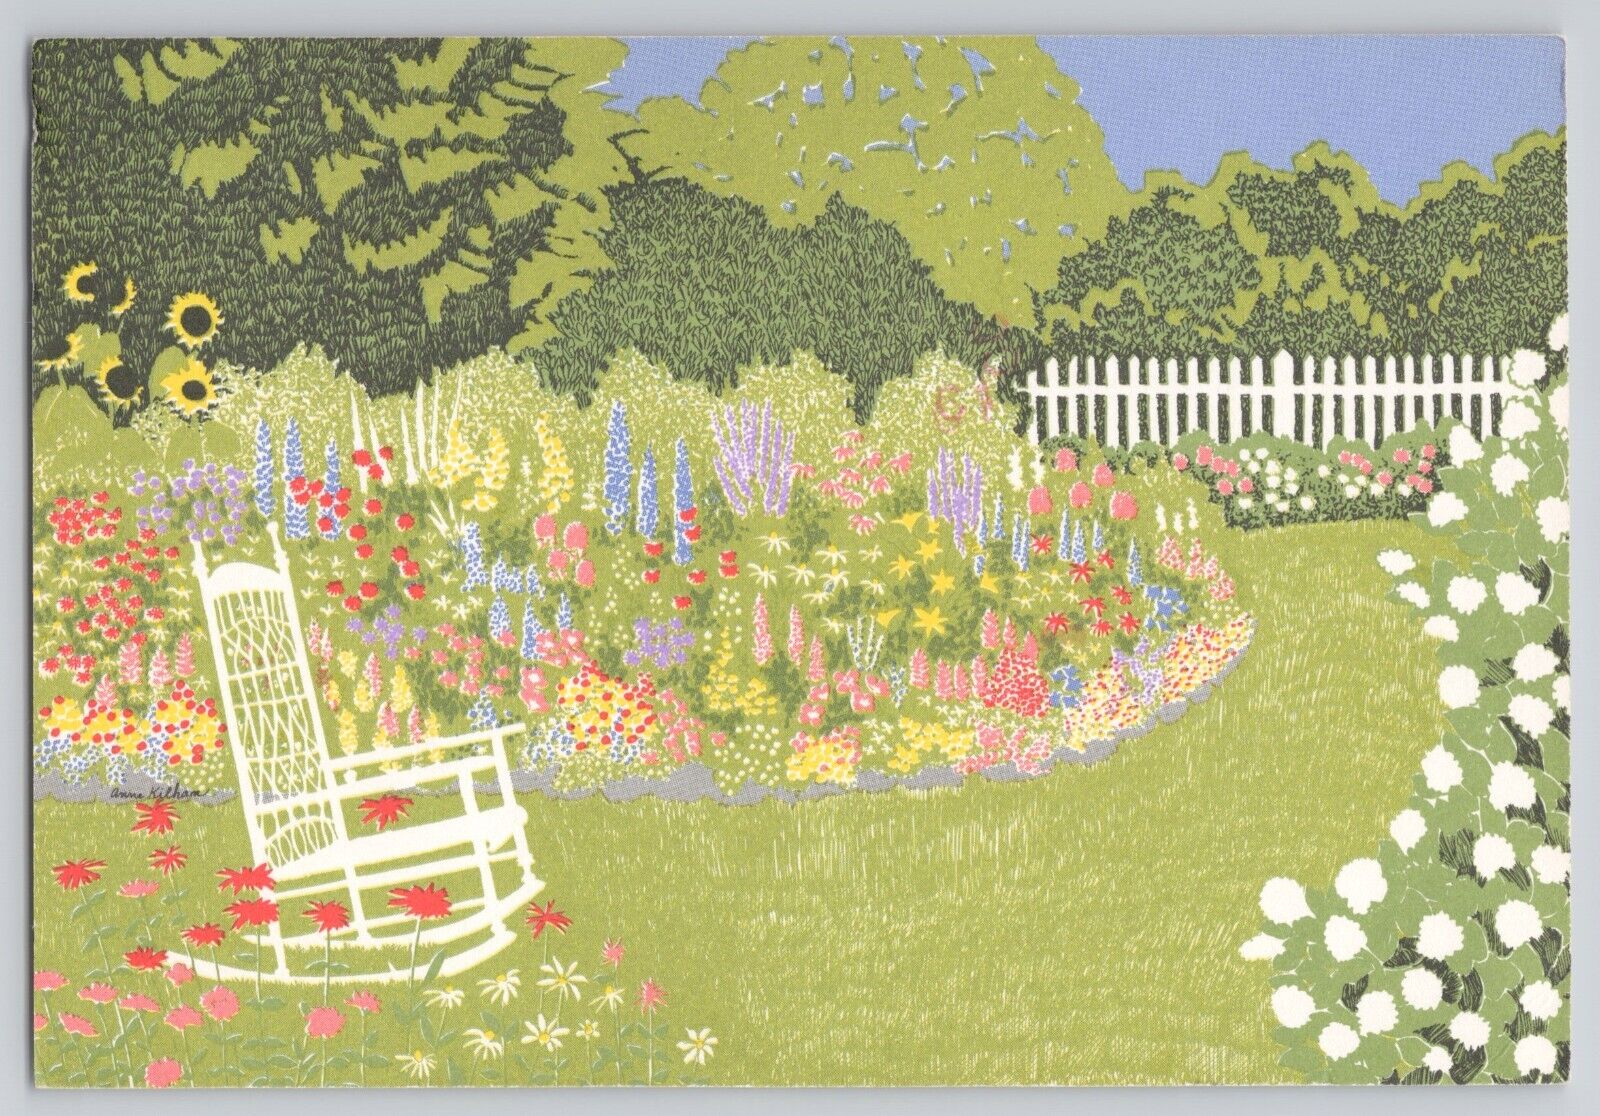 Wicker Chair Artist Painting Postcard Wicker Chain in the Garden